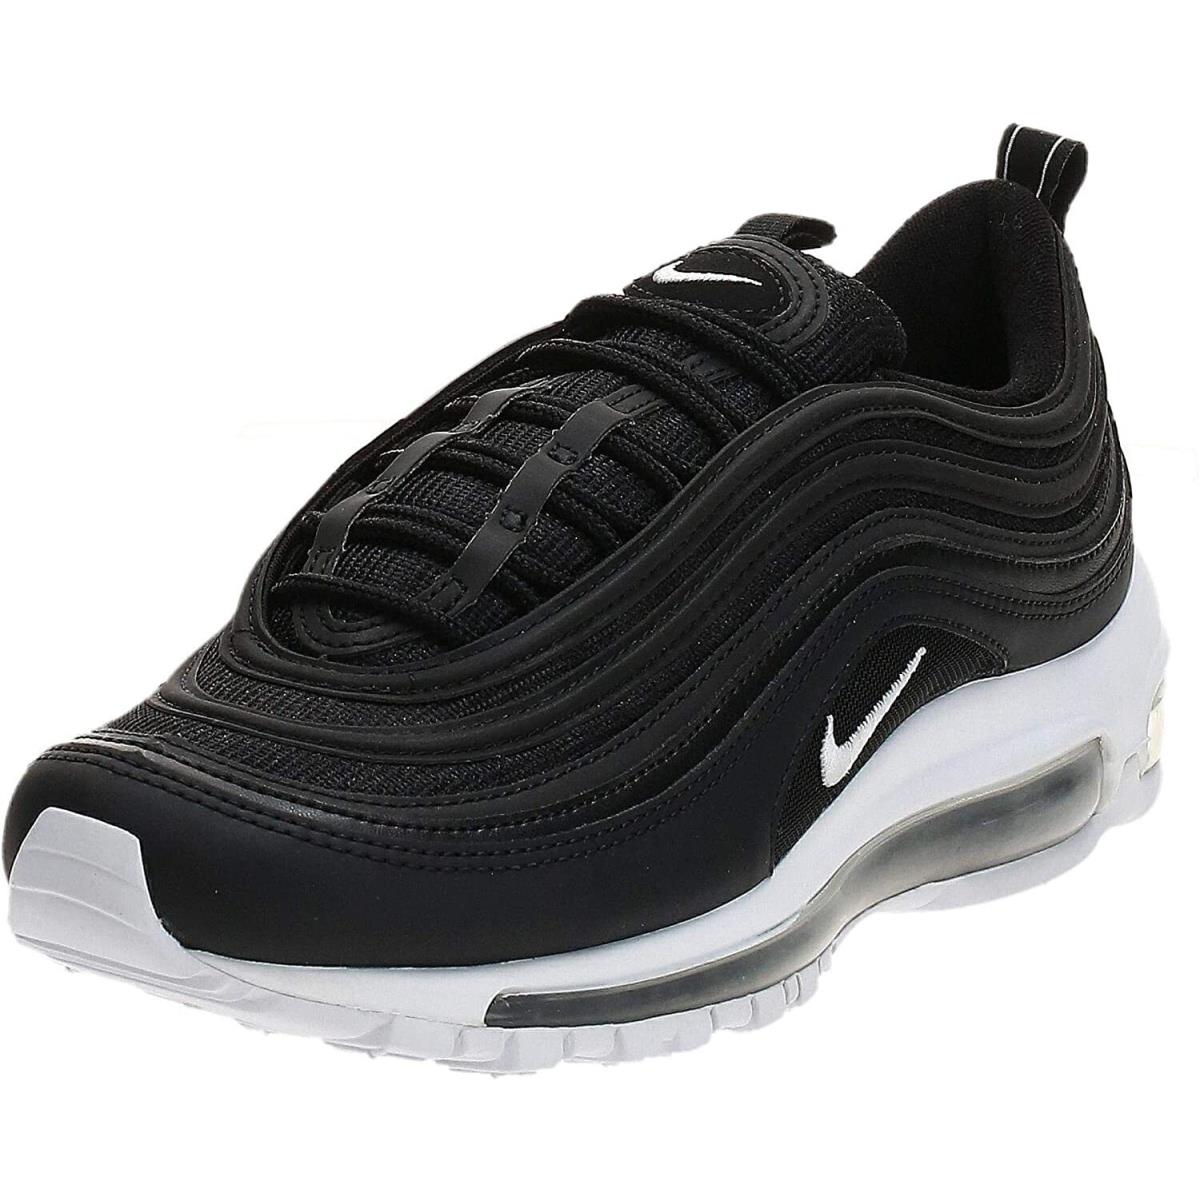 Nike Air Max 97 921826-001 Men`s Black/white Sneaker Shoes Size US 8.5 WR155